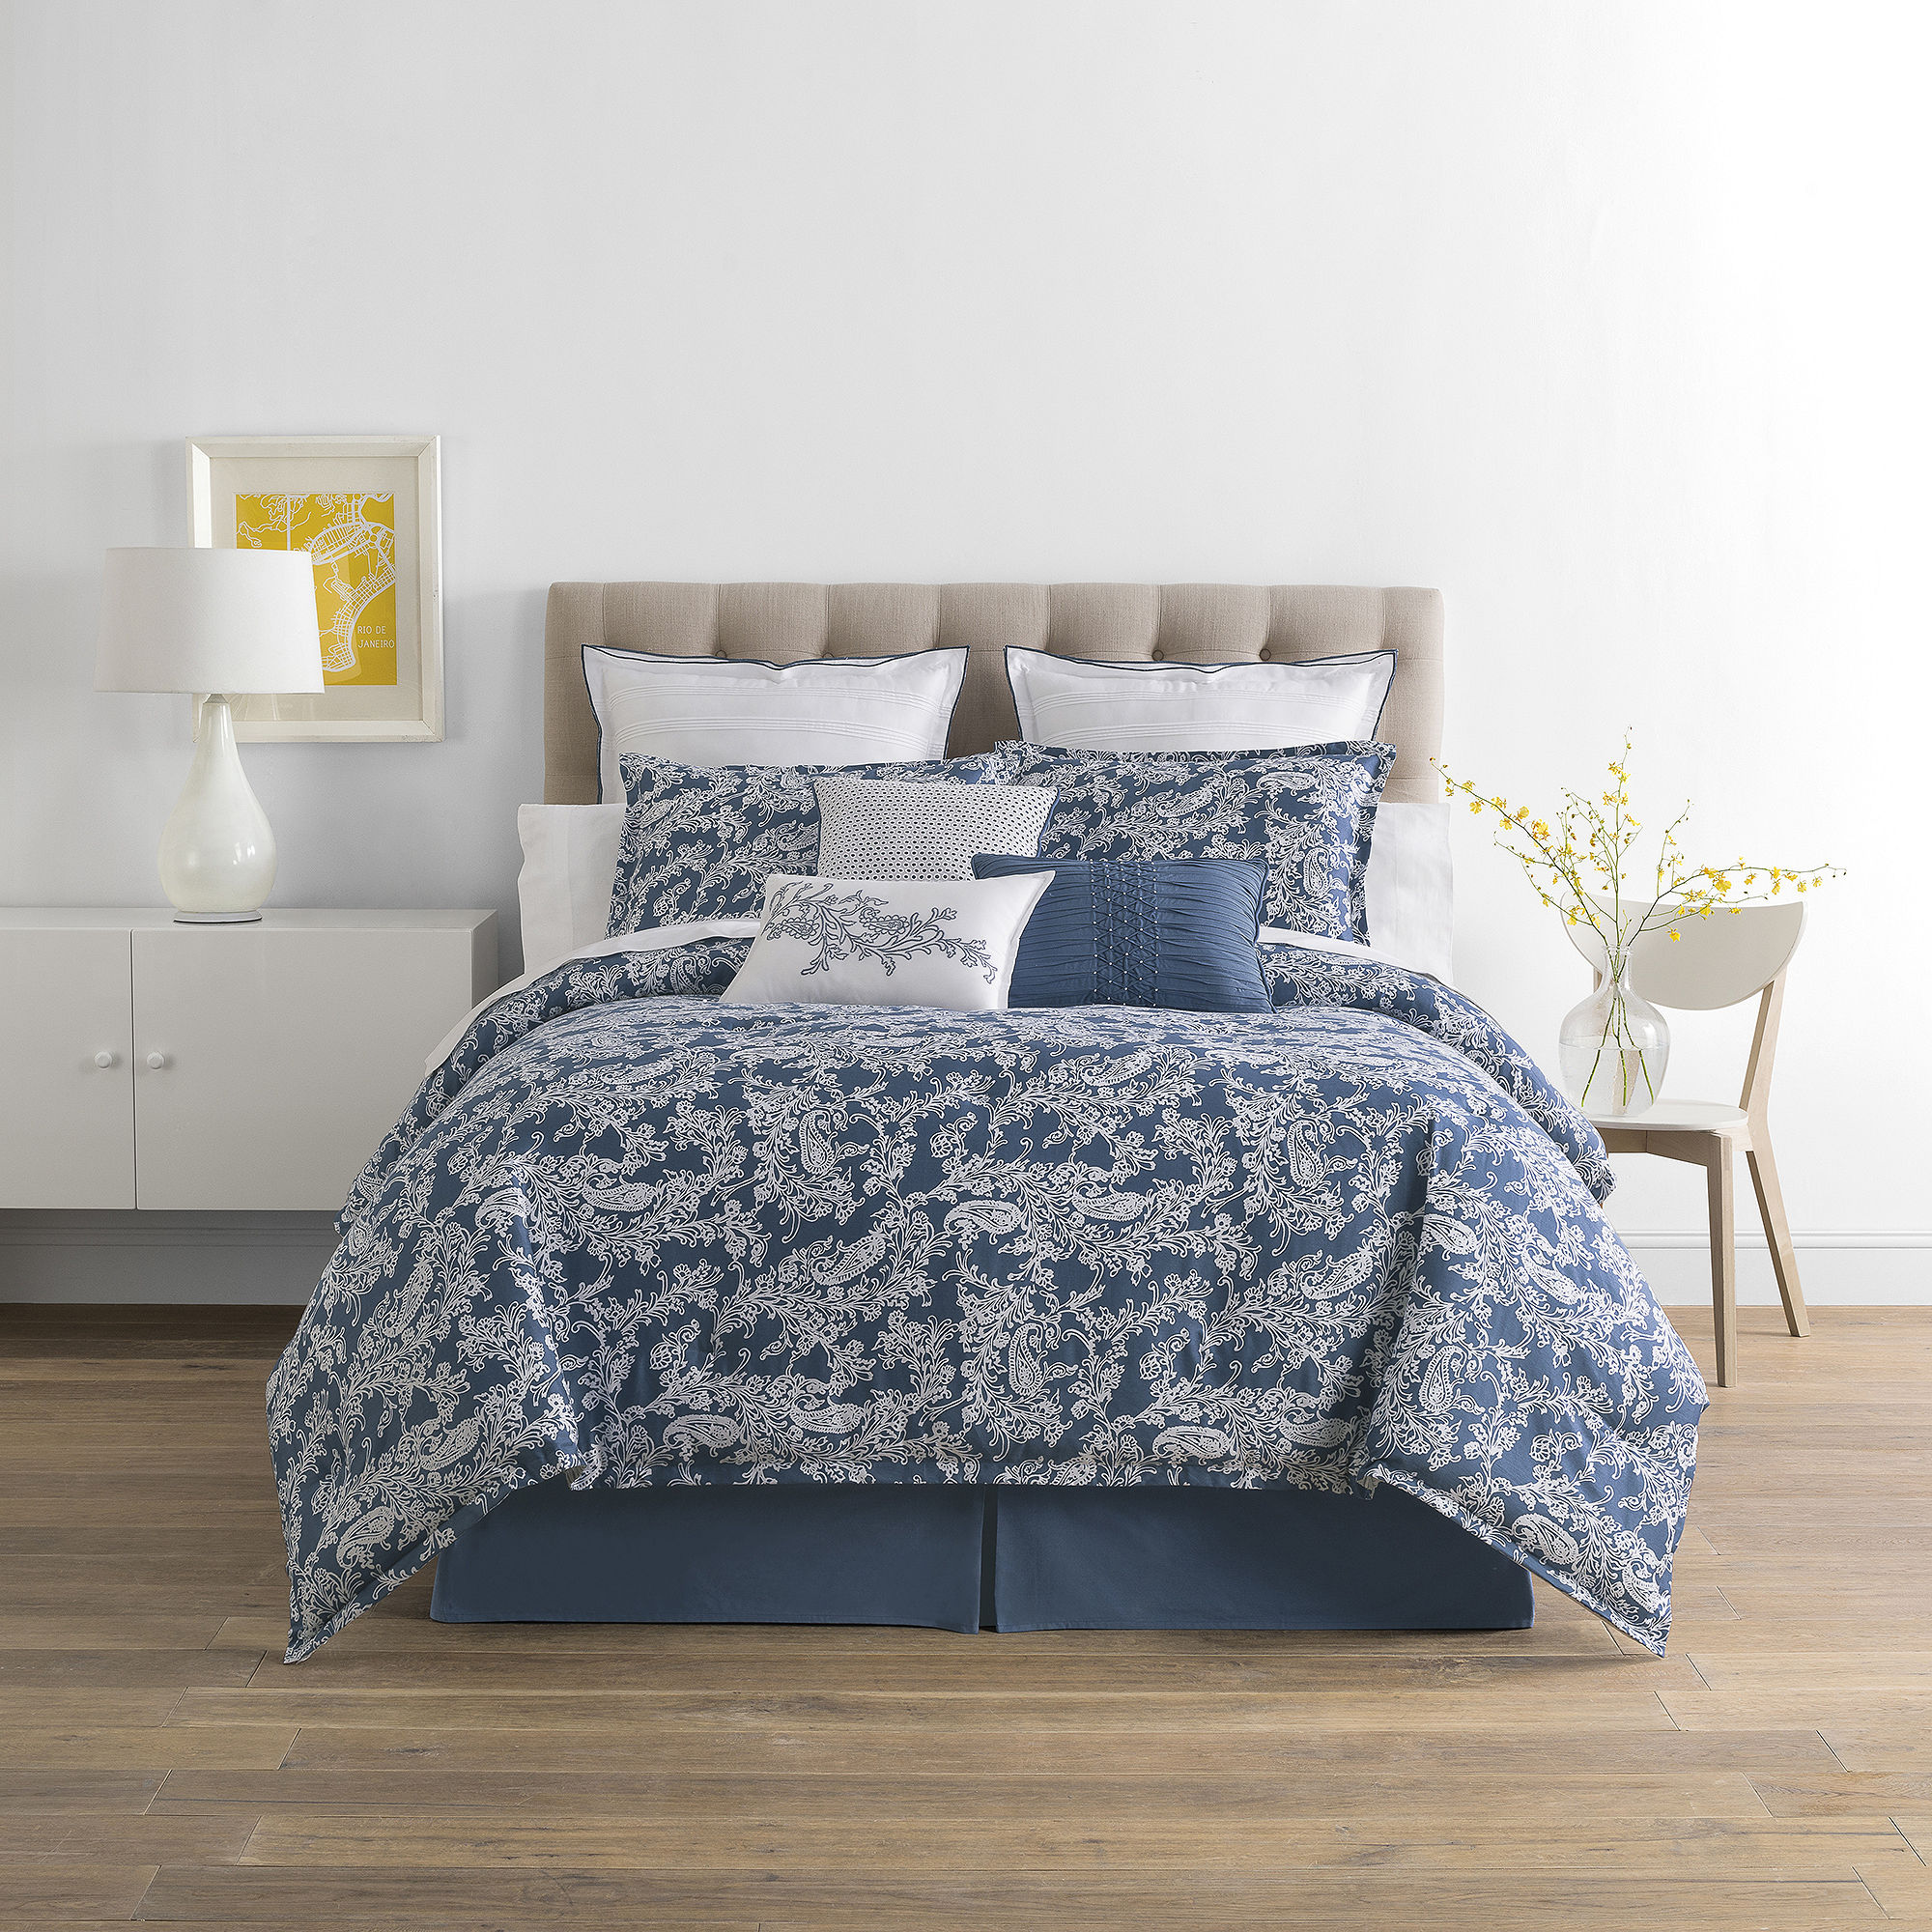 CHEAP JCPenney Home Hillcrest 4-pc. Comforter Set OFFER | Bedding Sets ...